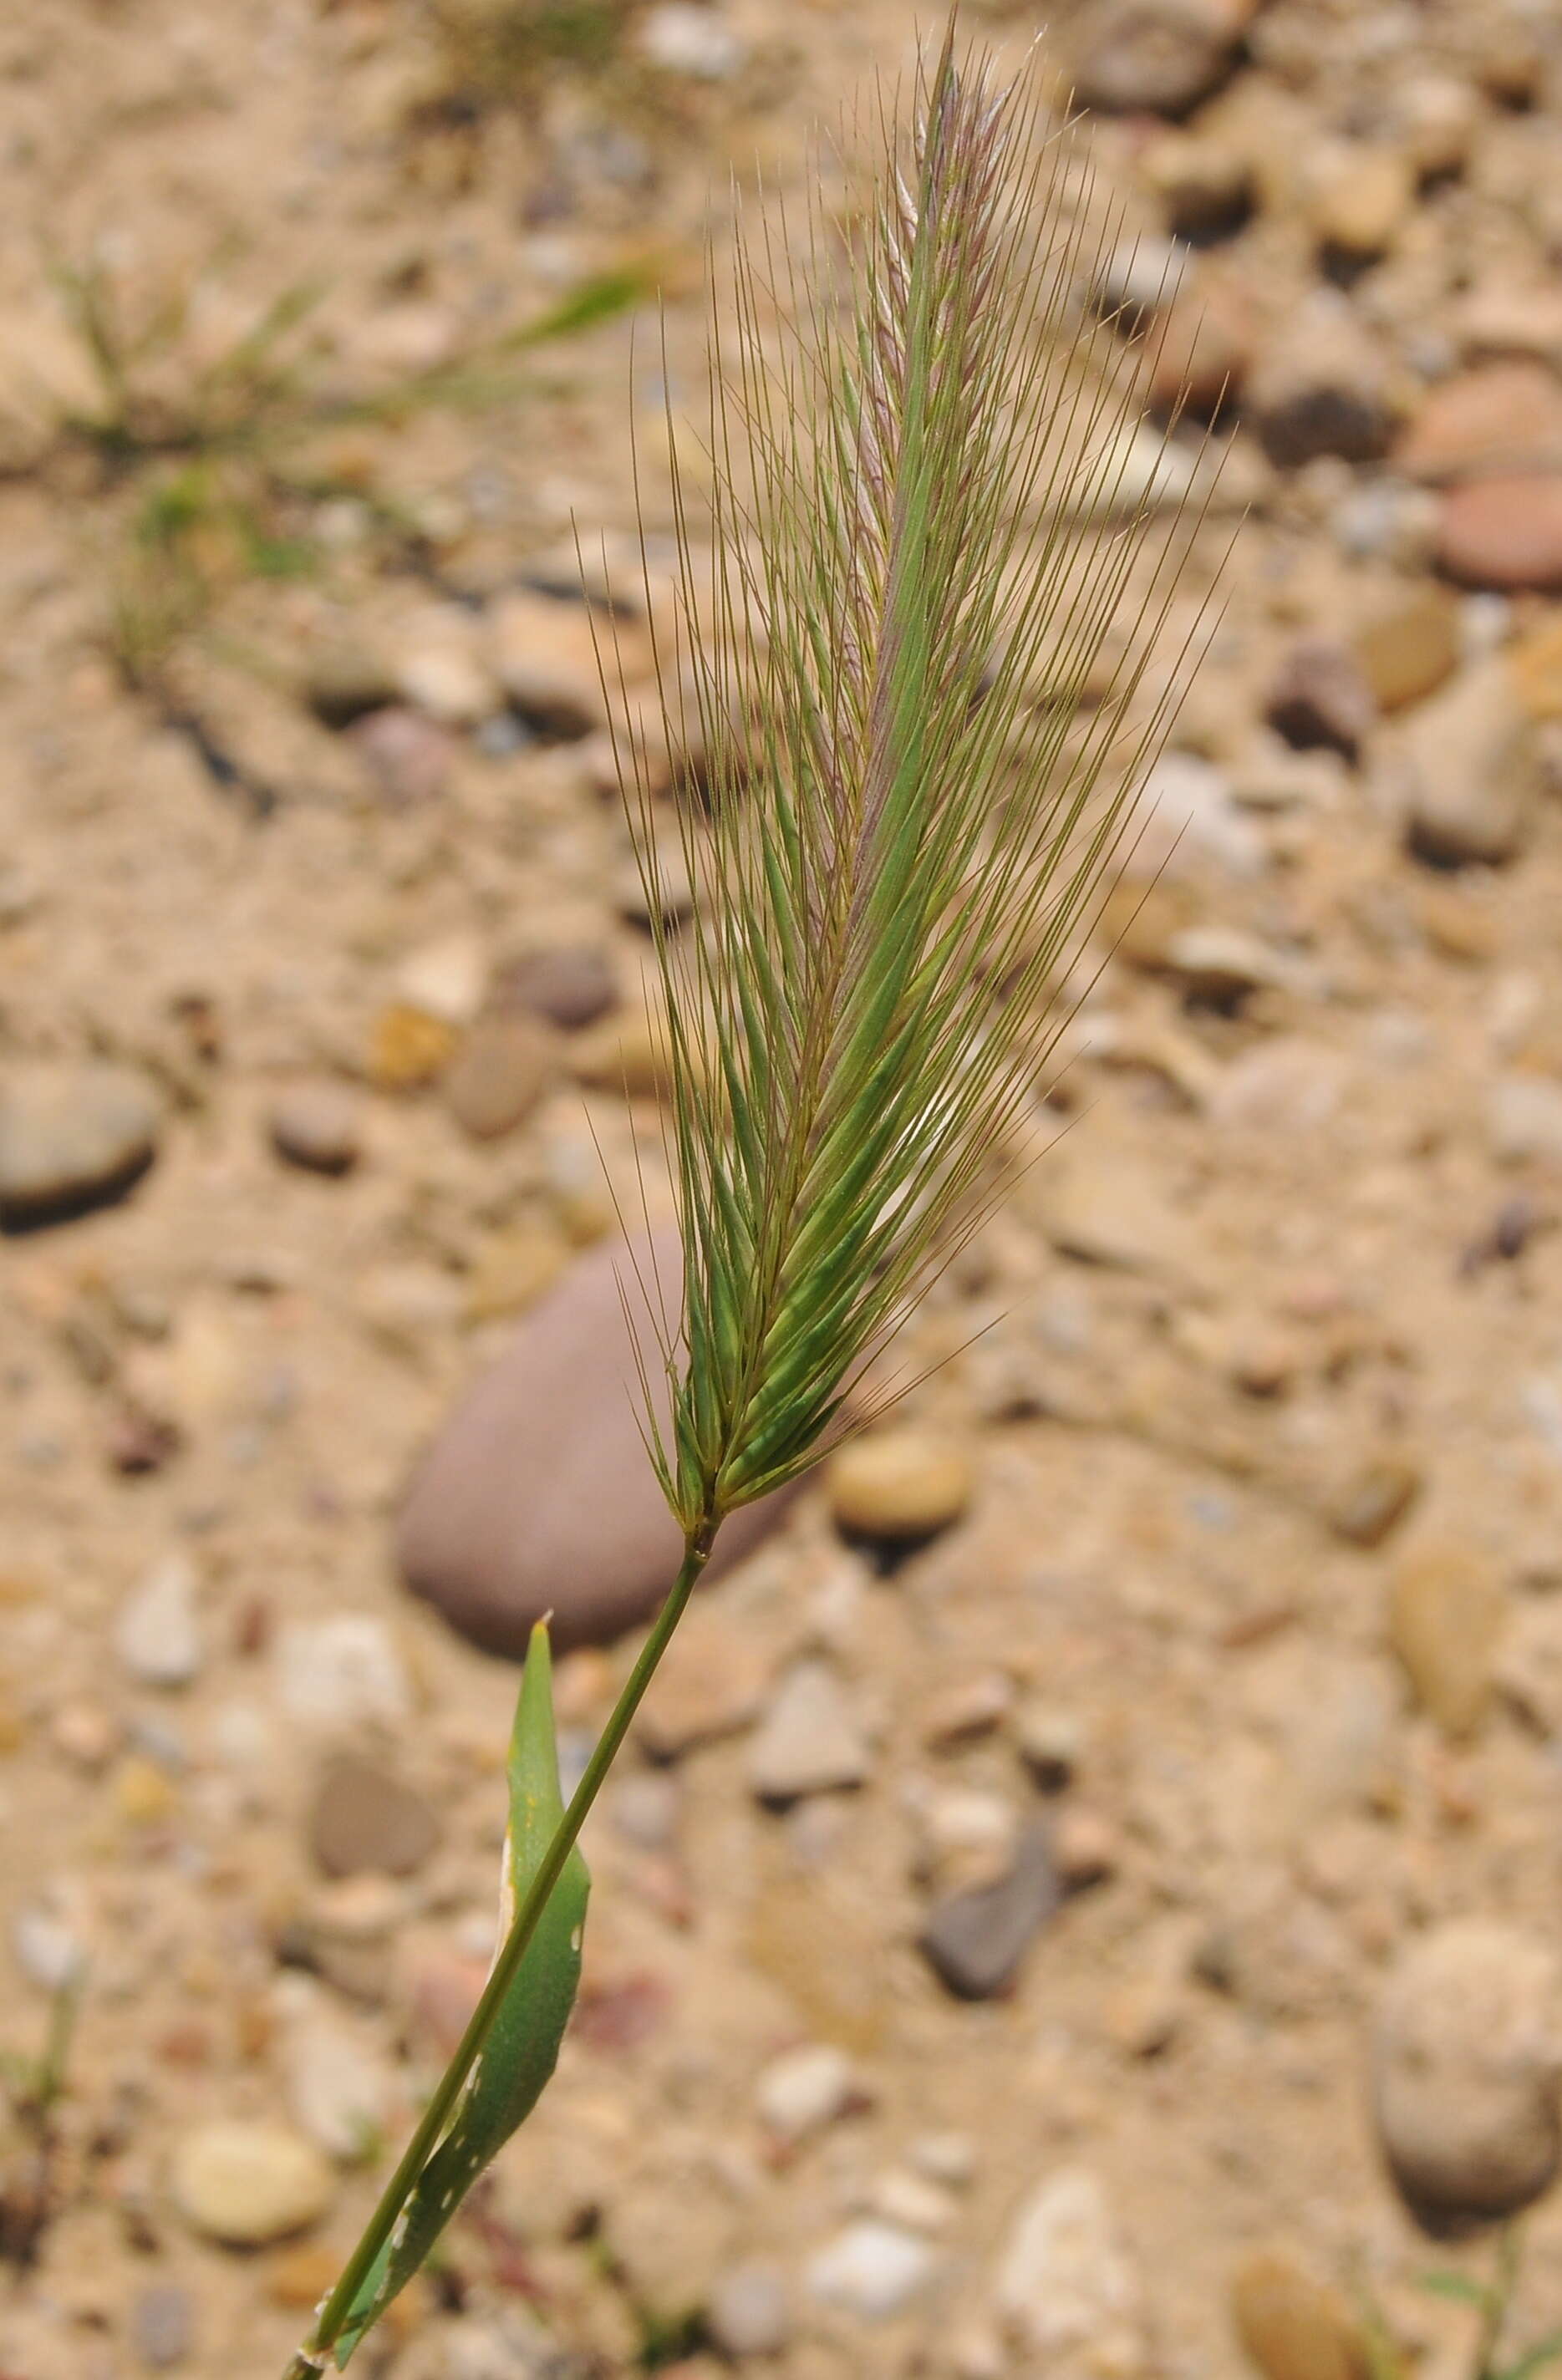 Image of barley